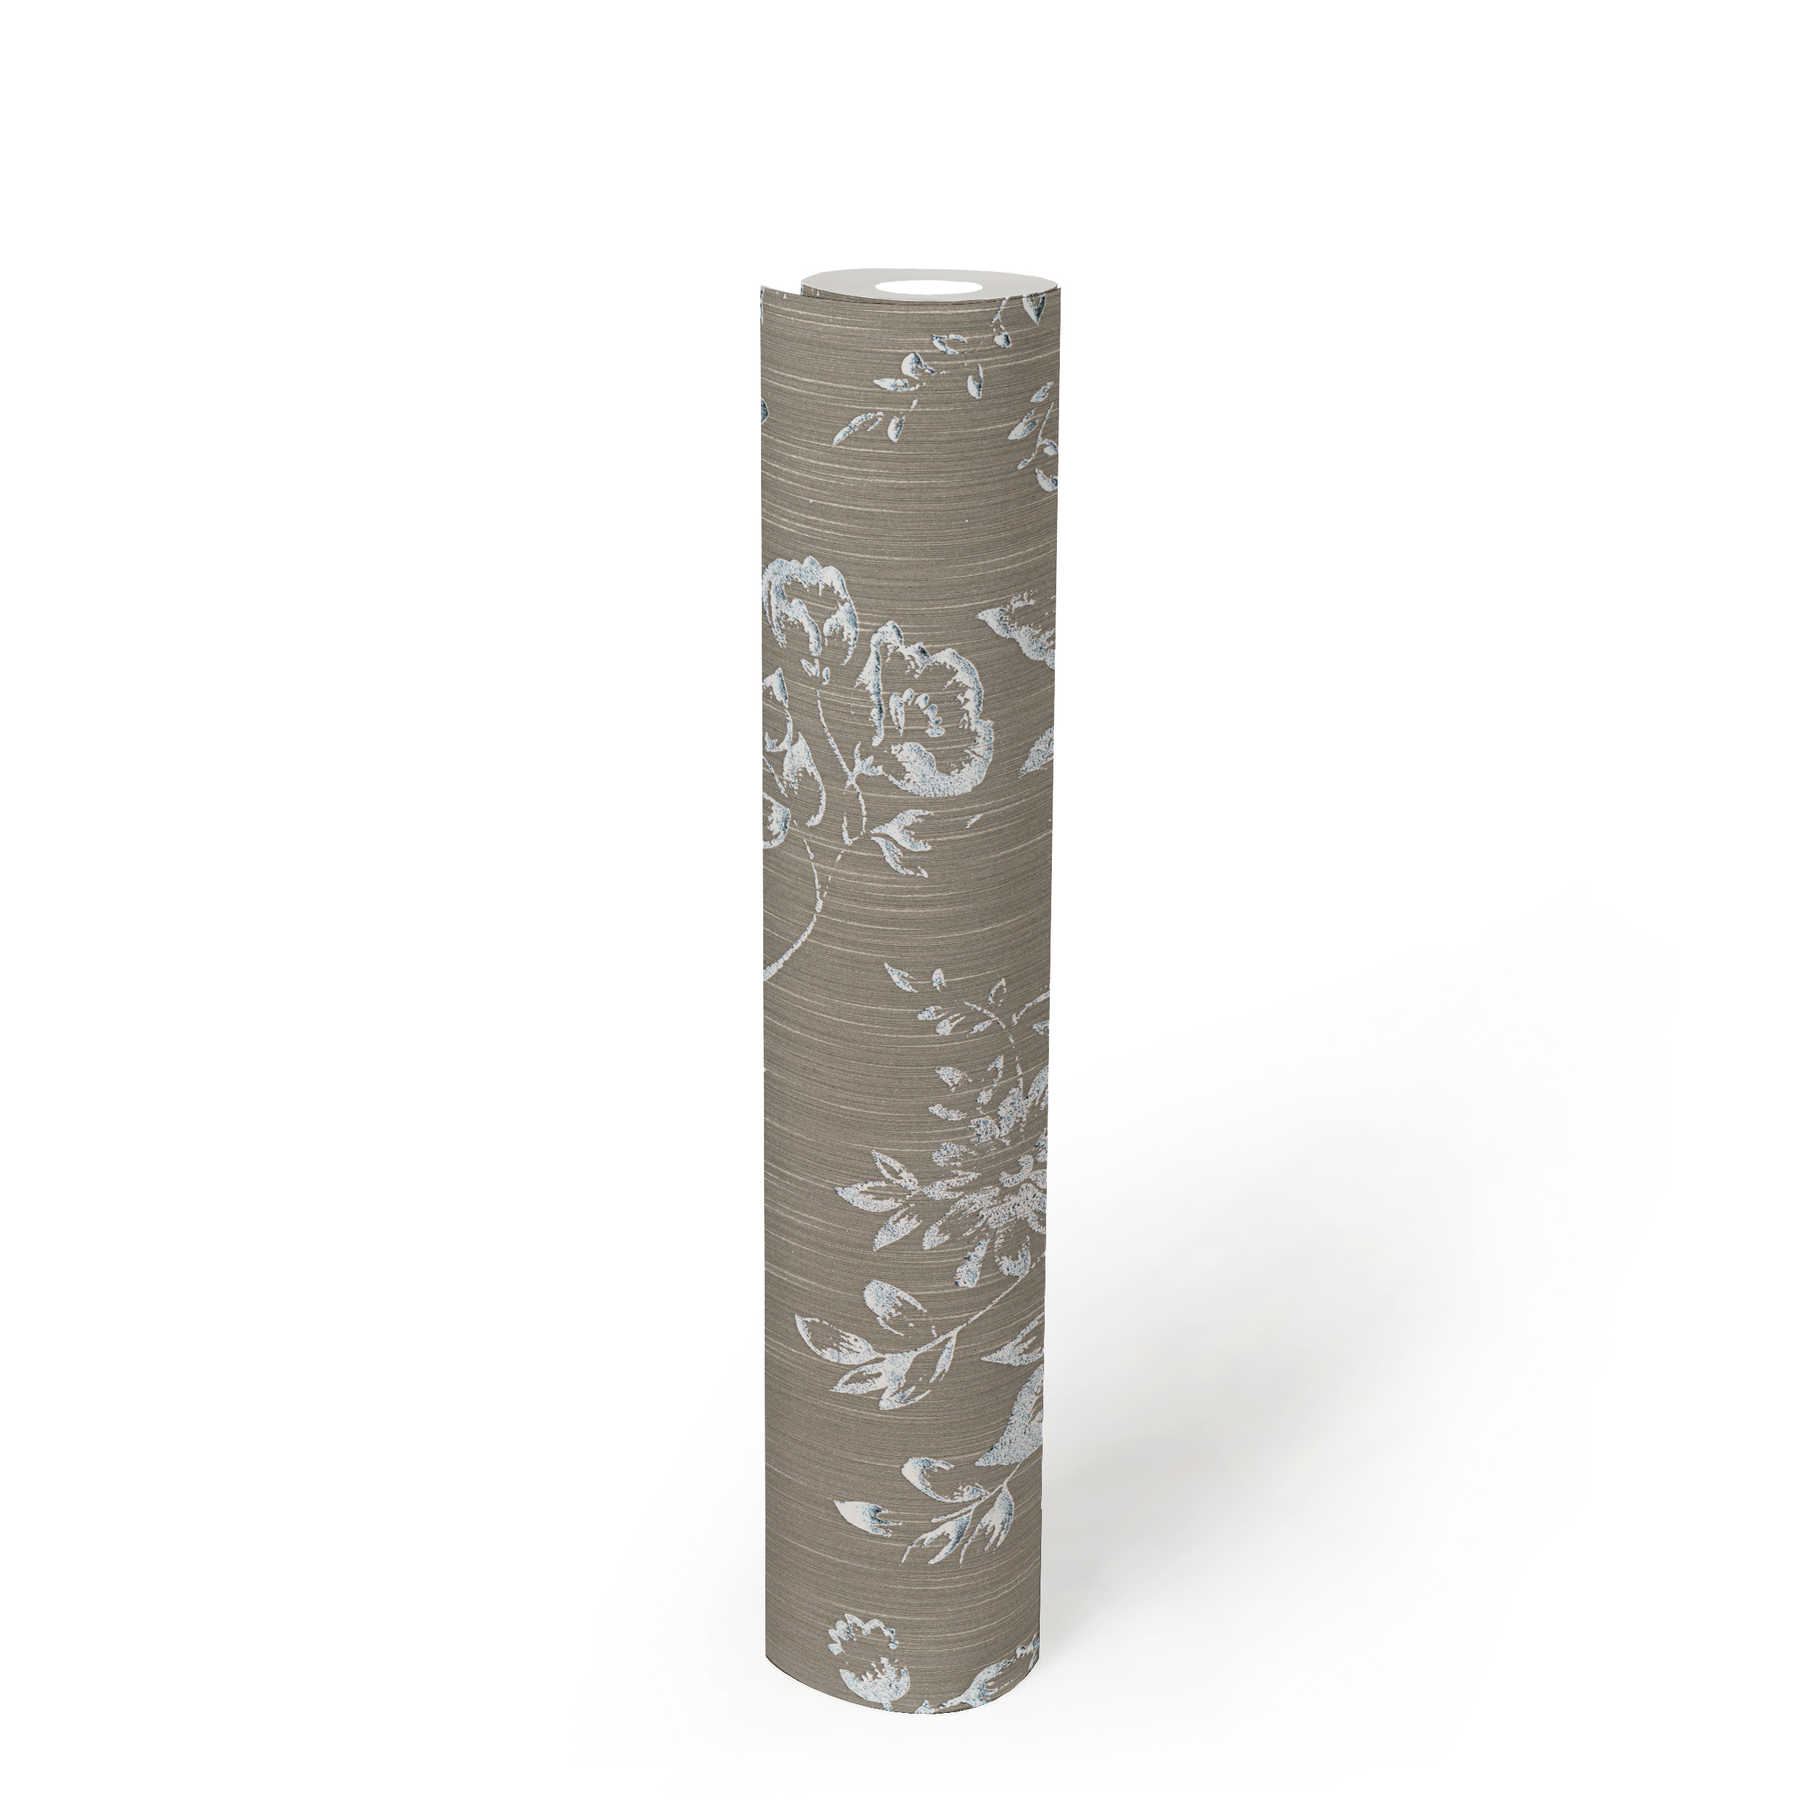             Papel pintado texturizado con motivos florales plateados - plata, marrón
        